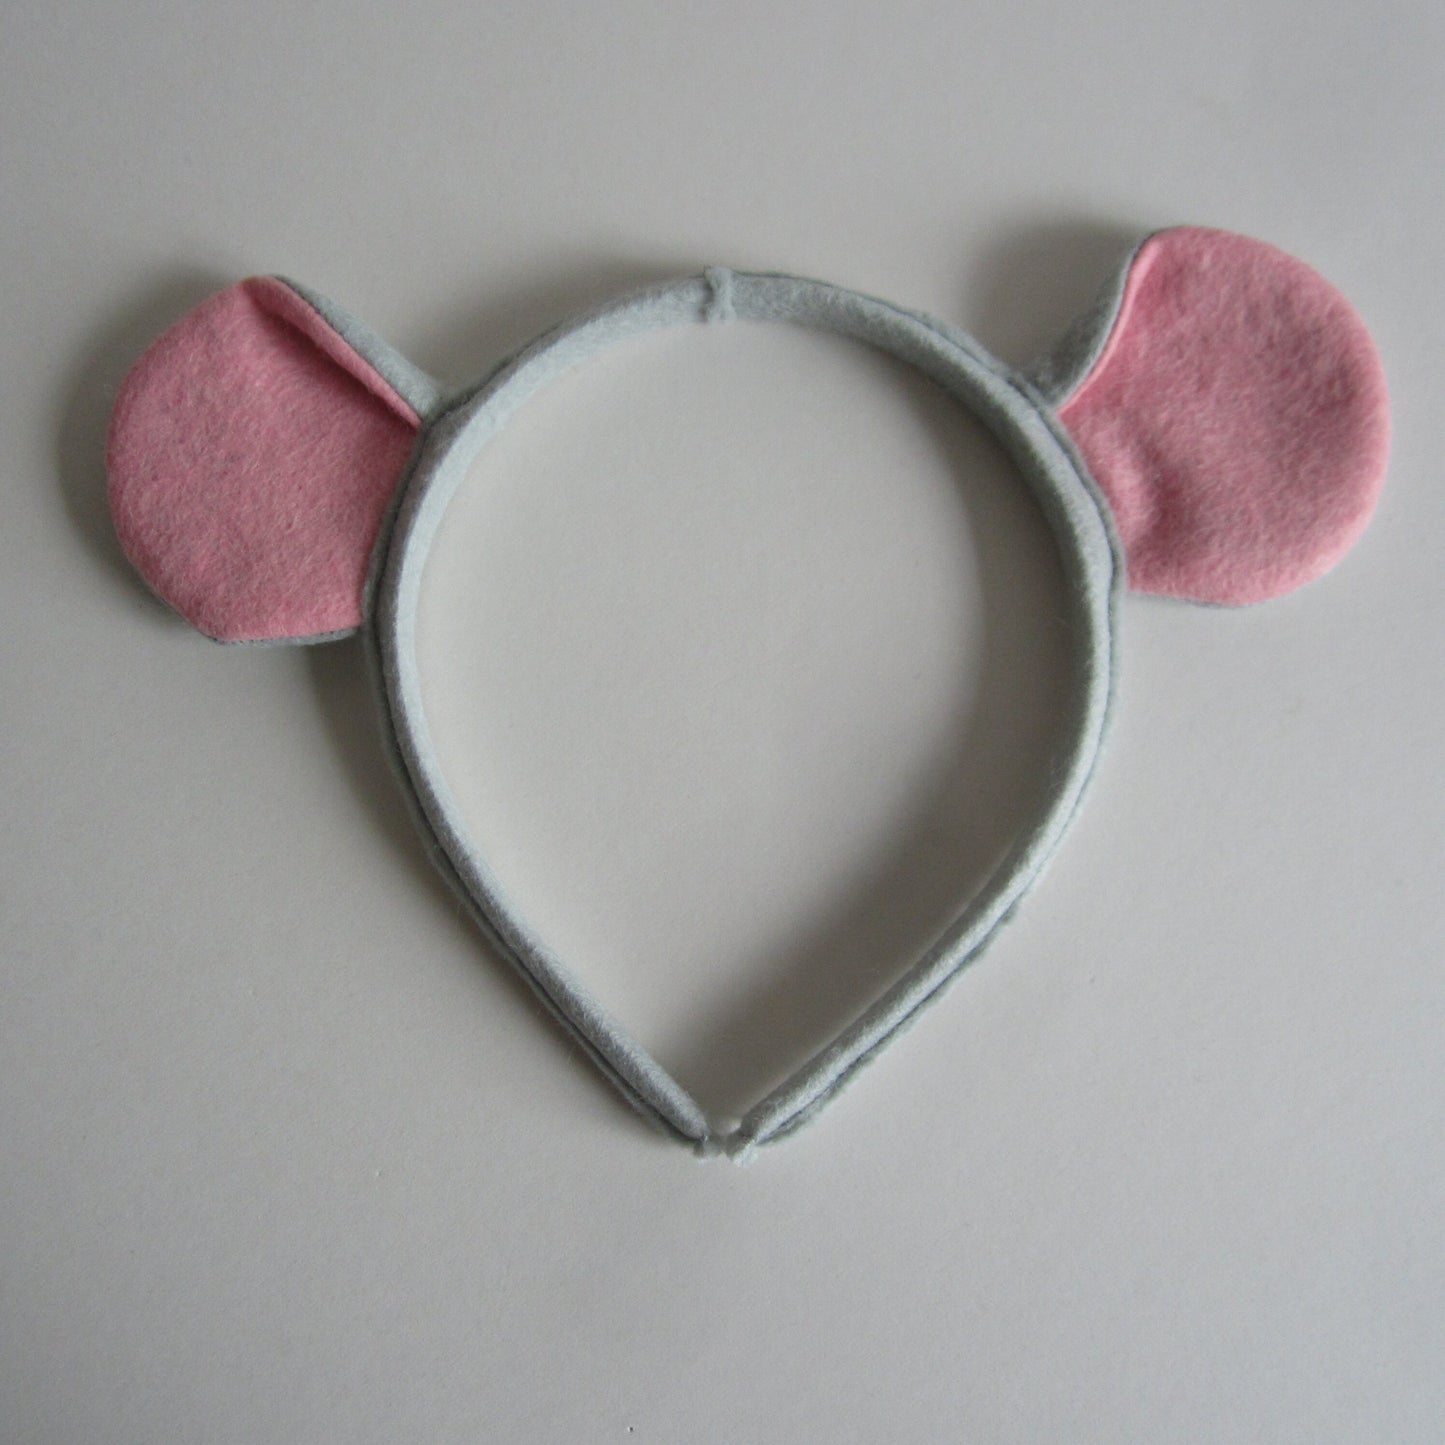 Mouse Ears Hairband Made of Light Grey Felt